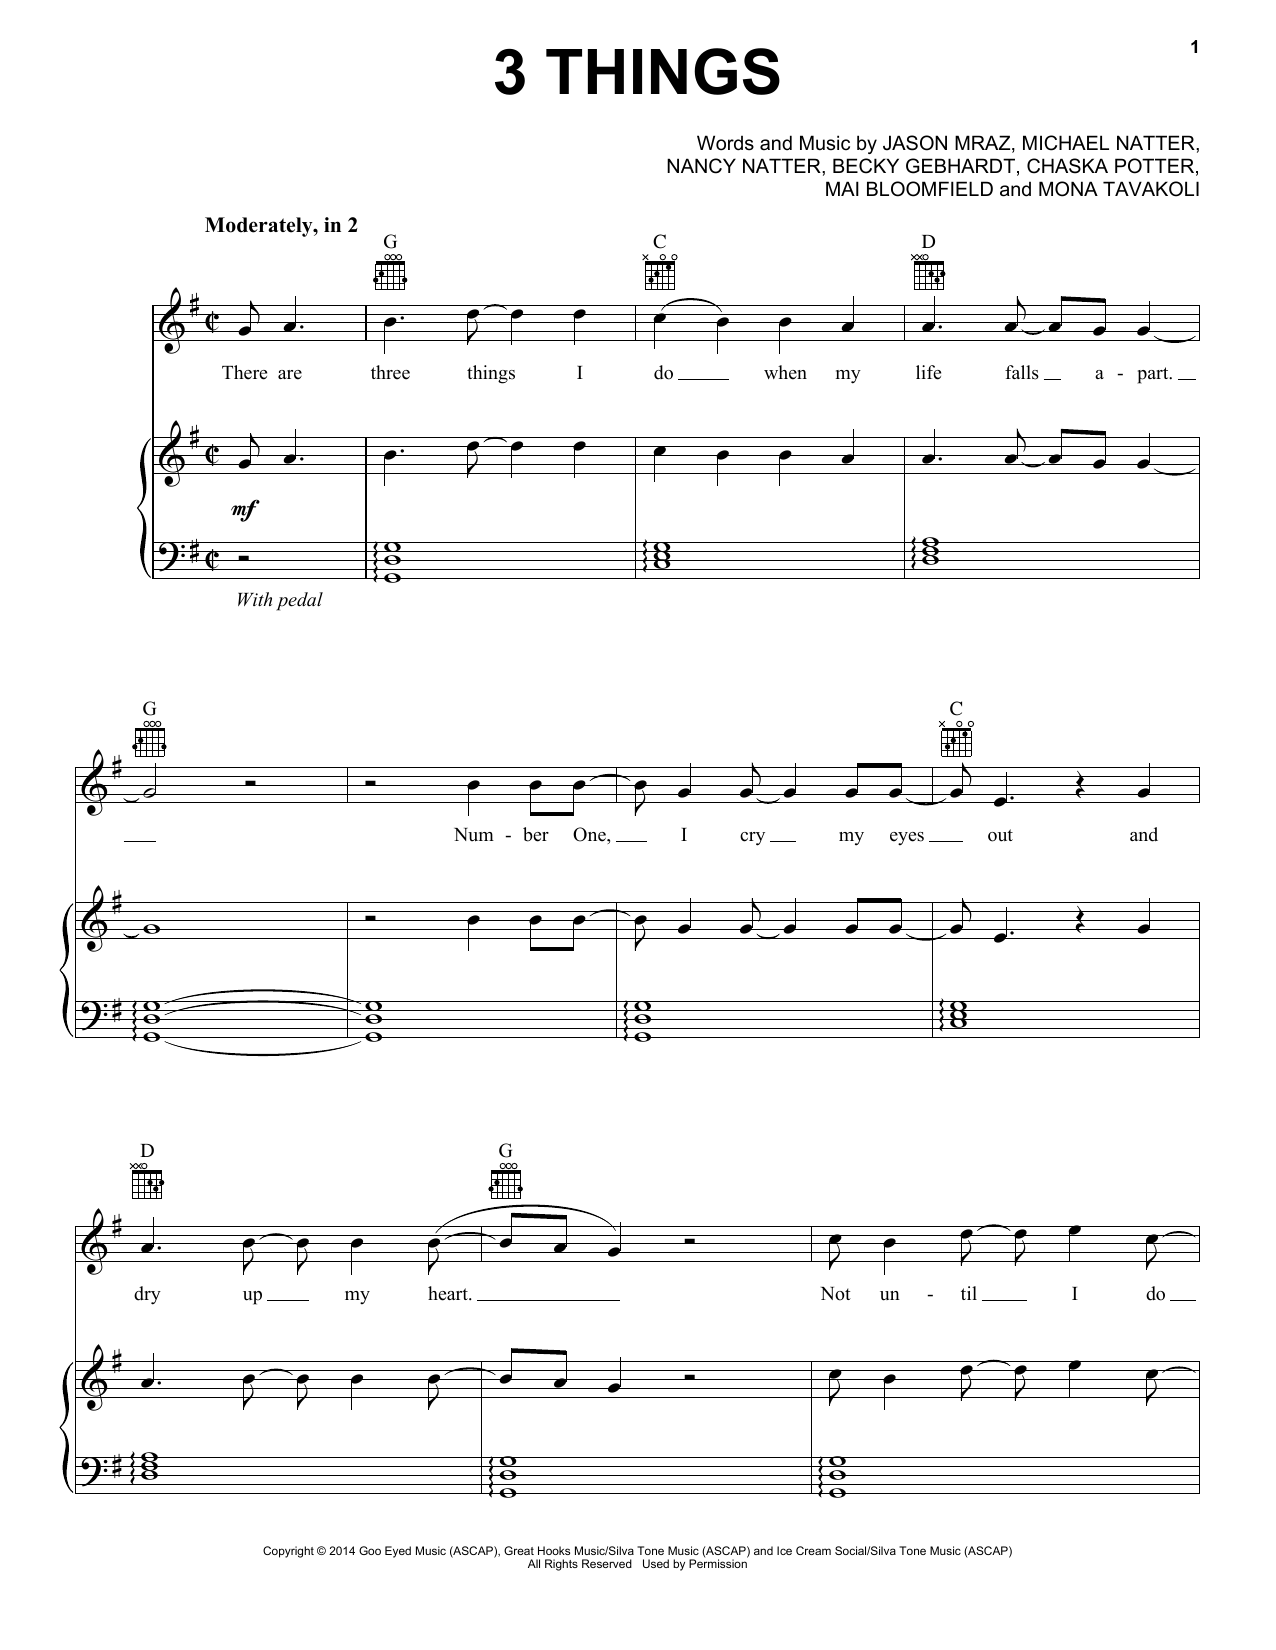 Jason Mraz 3 Things Sheet Music Notes & Chords for Guitar Tab - Download or Print PDF